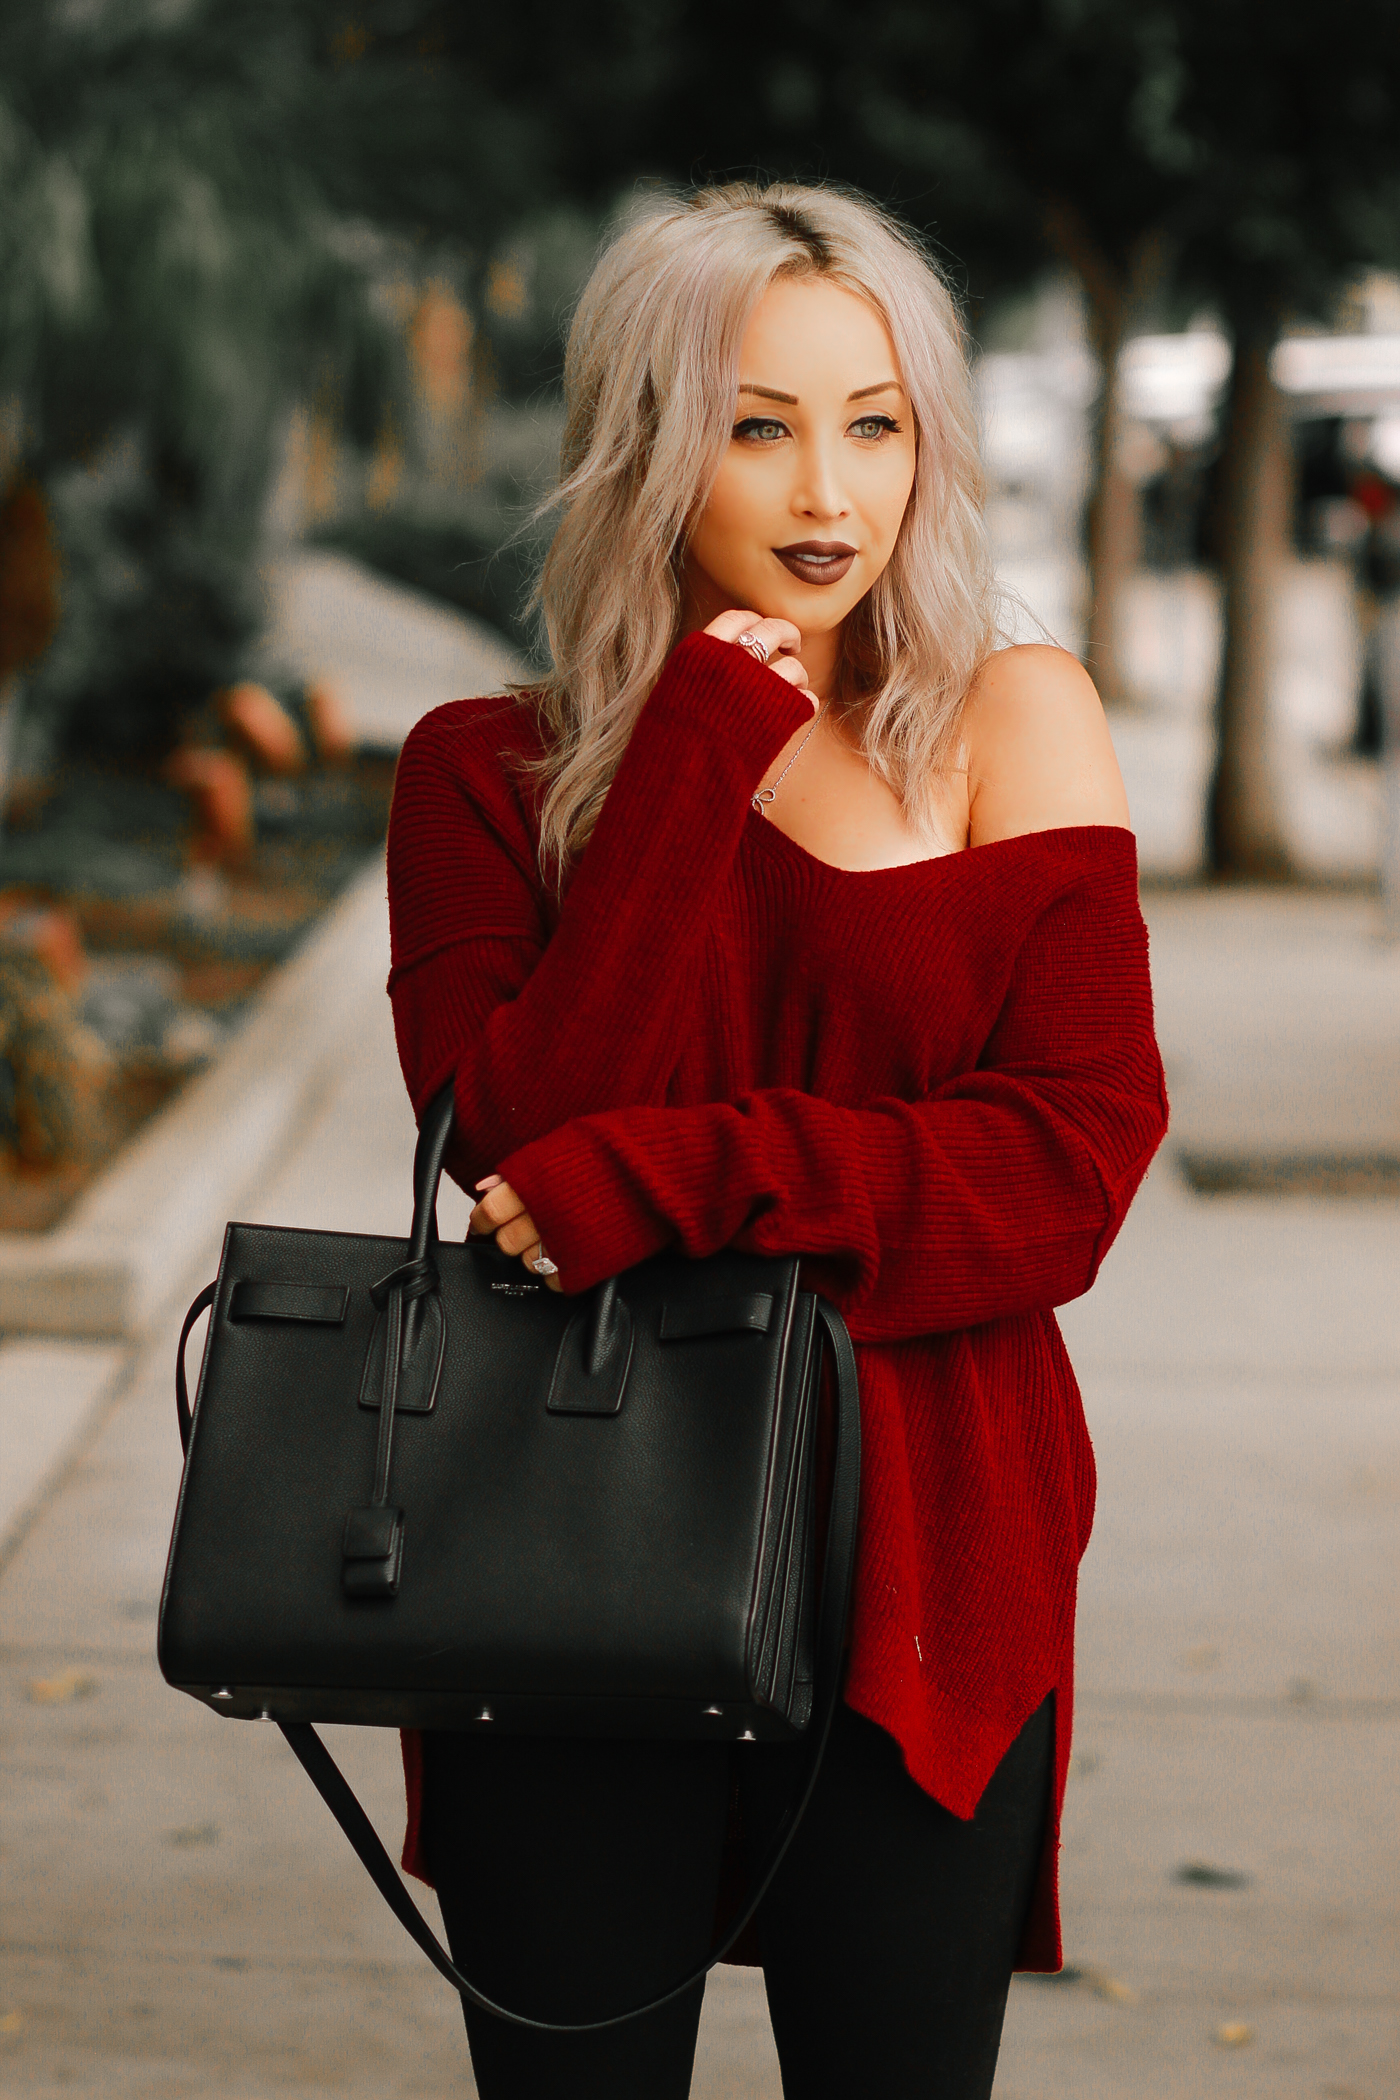 Blondie in the City | Burgundy Off The Shoulder Sweater | Black Saint Laurent Bag